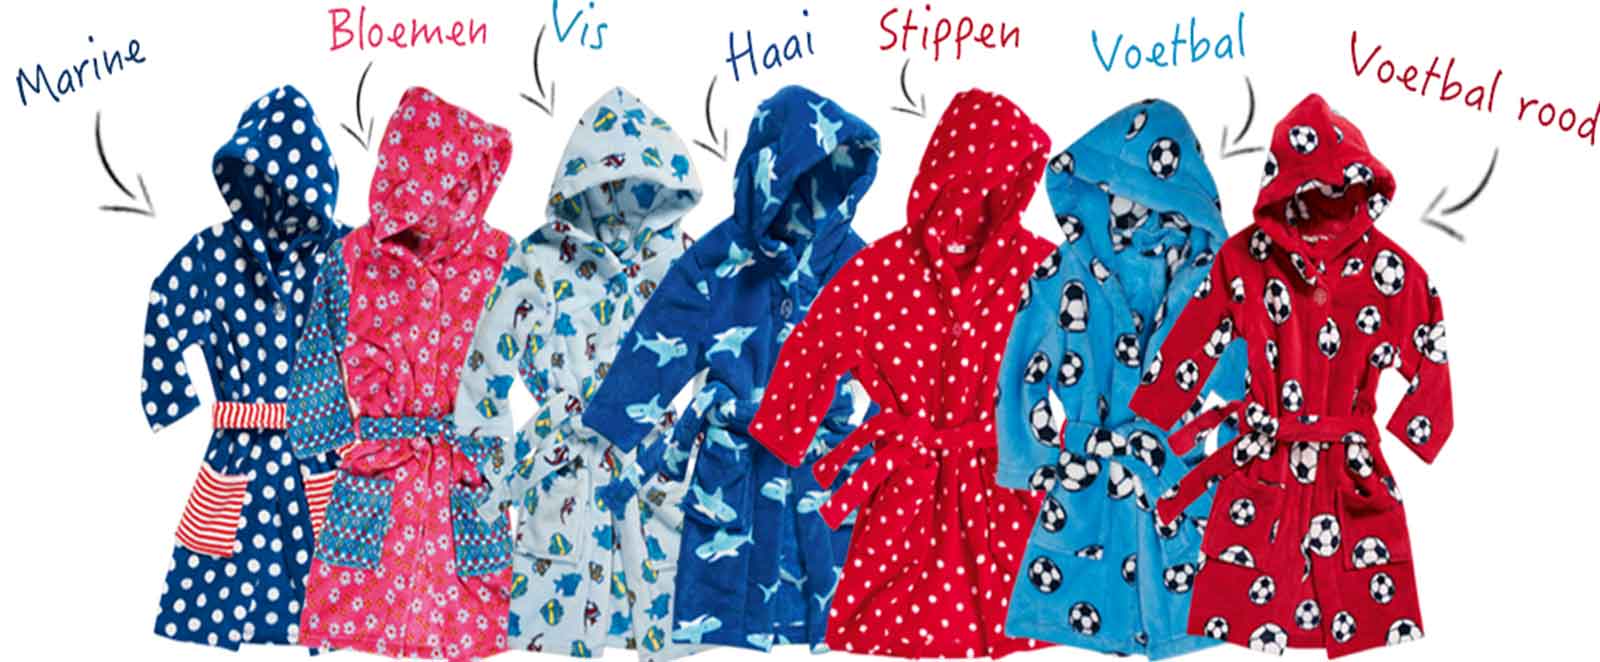 Kinderbadjassen kopen badjas.nl